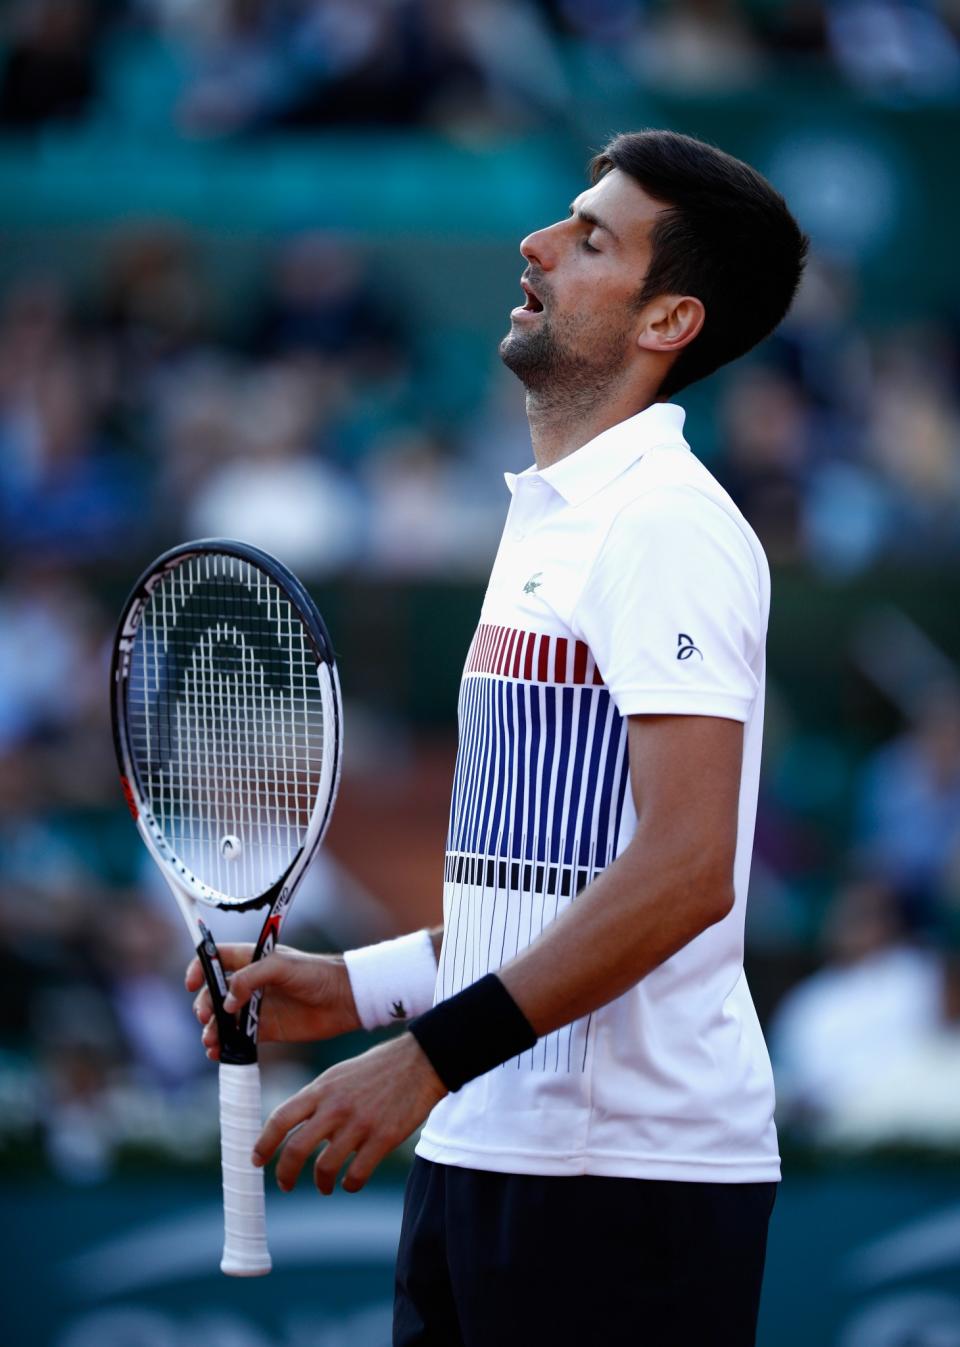 Novak Djokovic crumbled in the third set